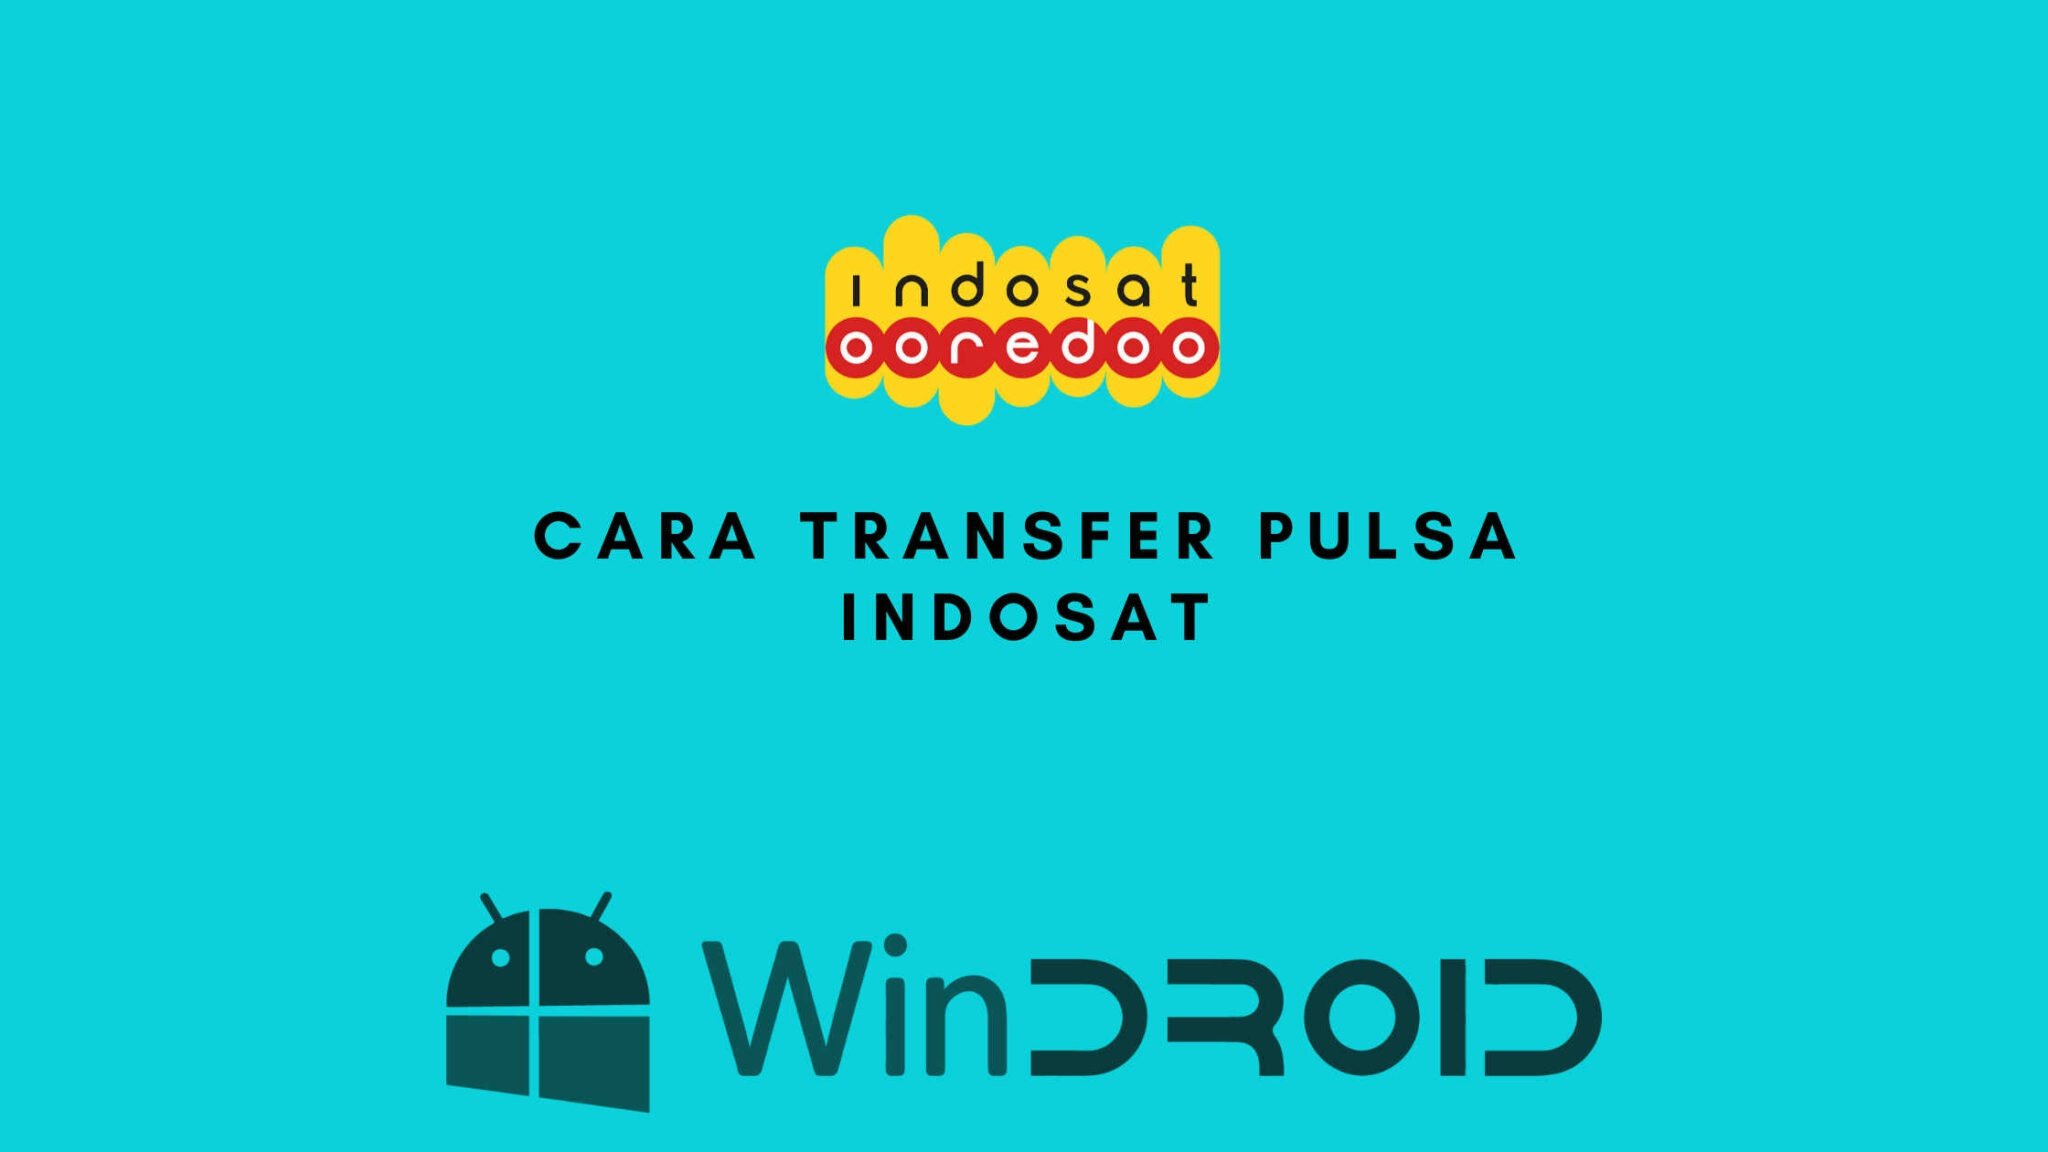 2 Cara Transfer Pulsa Indosat (Terbaru Juli 2021)